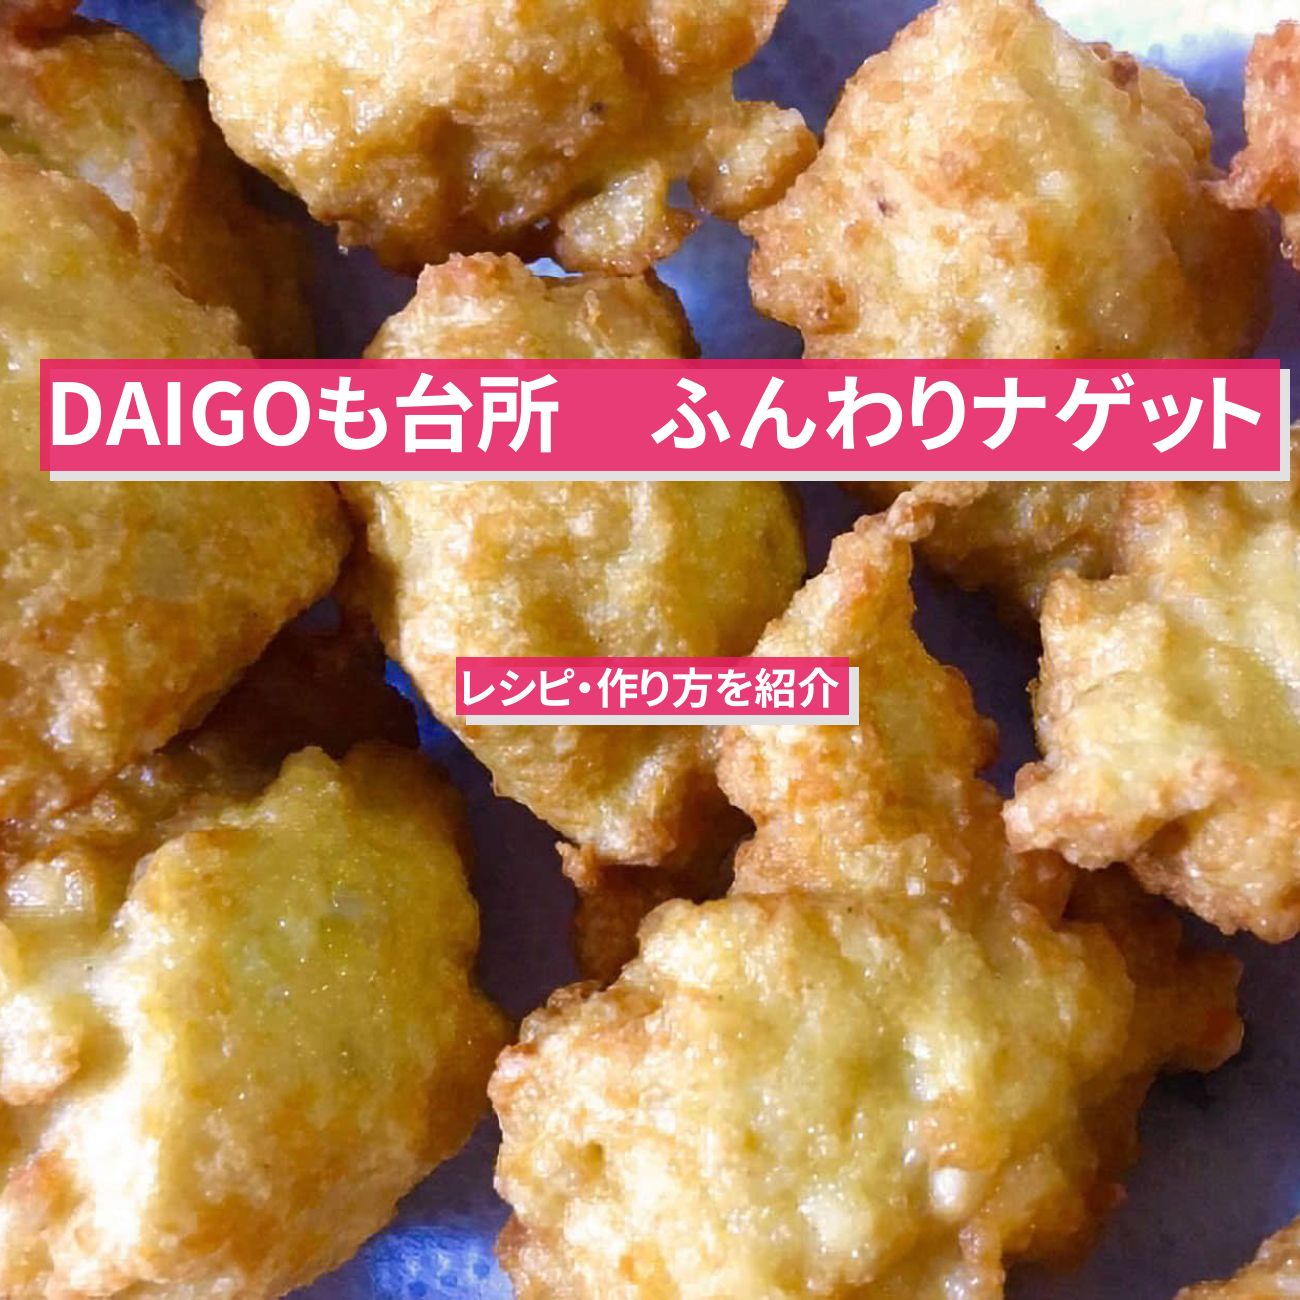 【DAIGOも台所】豆腐・長芋で『ふんわりナゲット』のレシピ・作り方を紹介〔ダイゴも台所〕